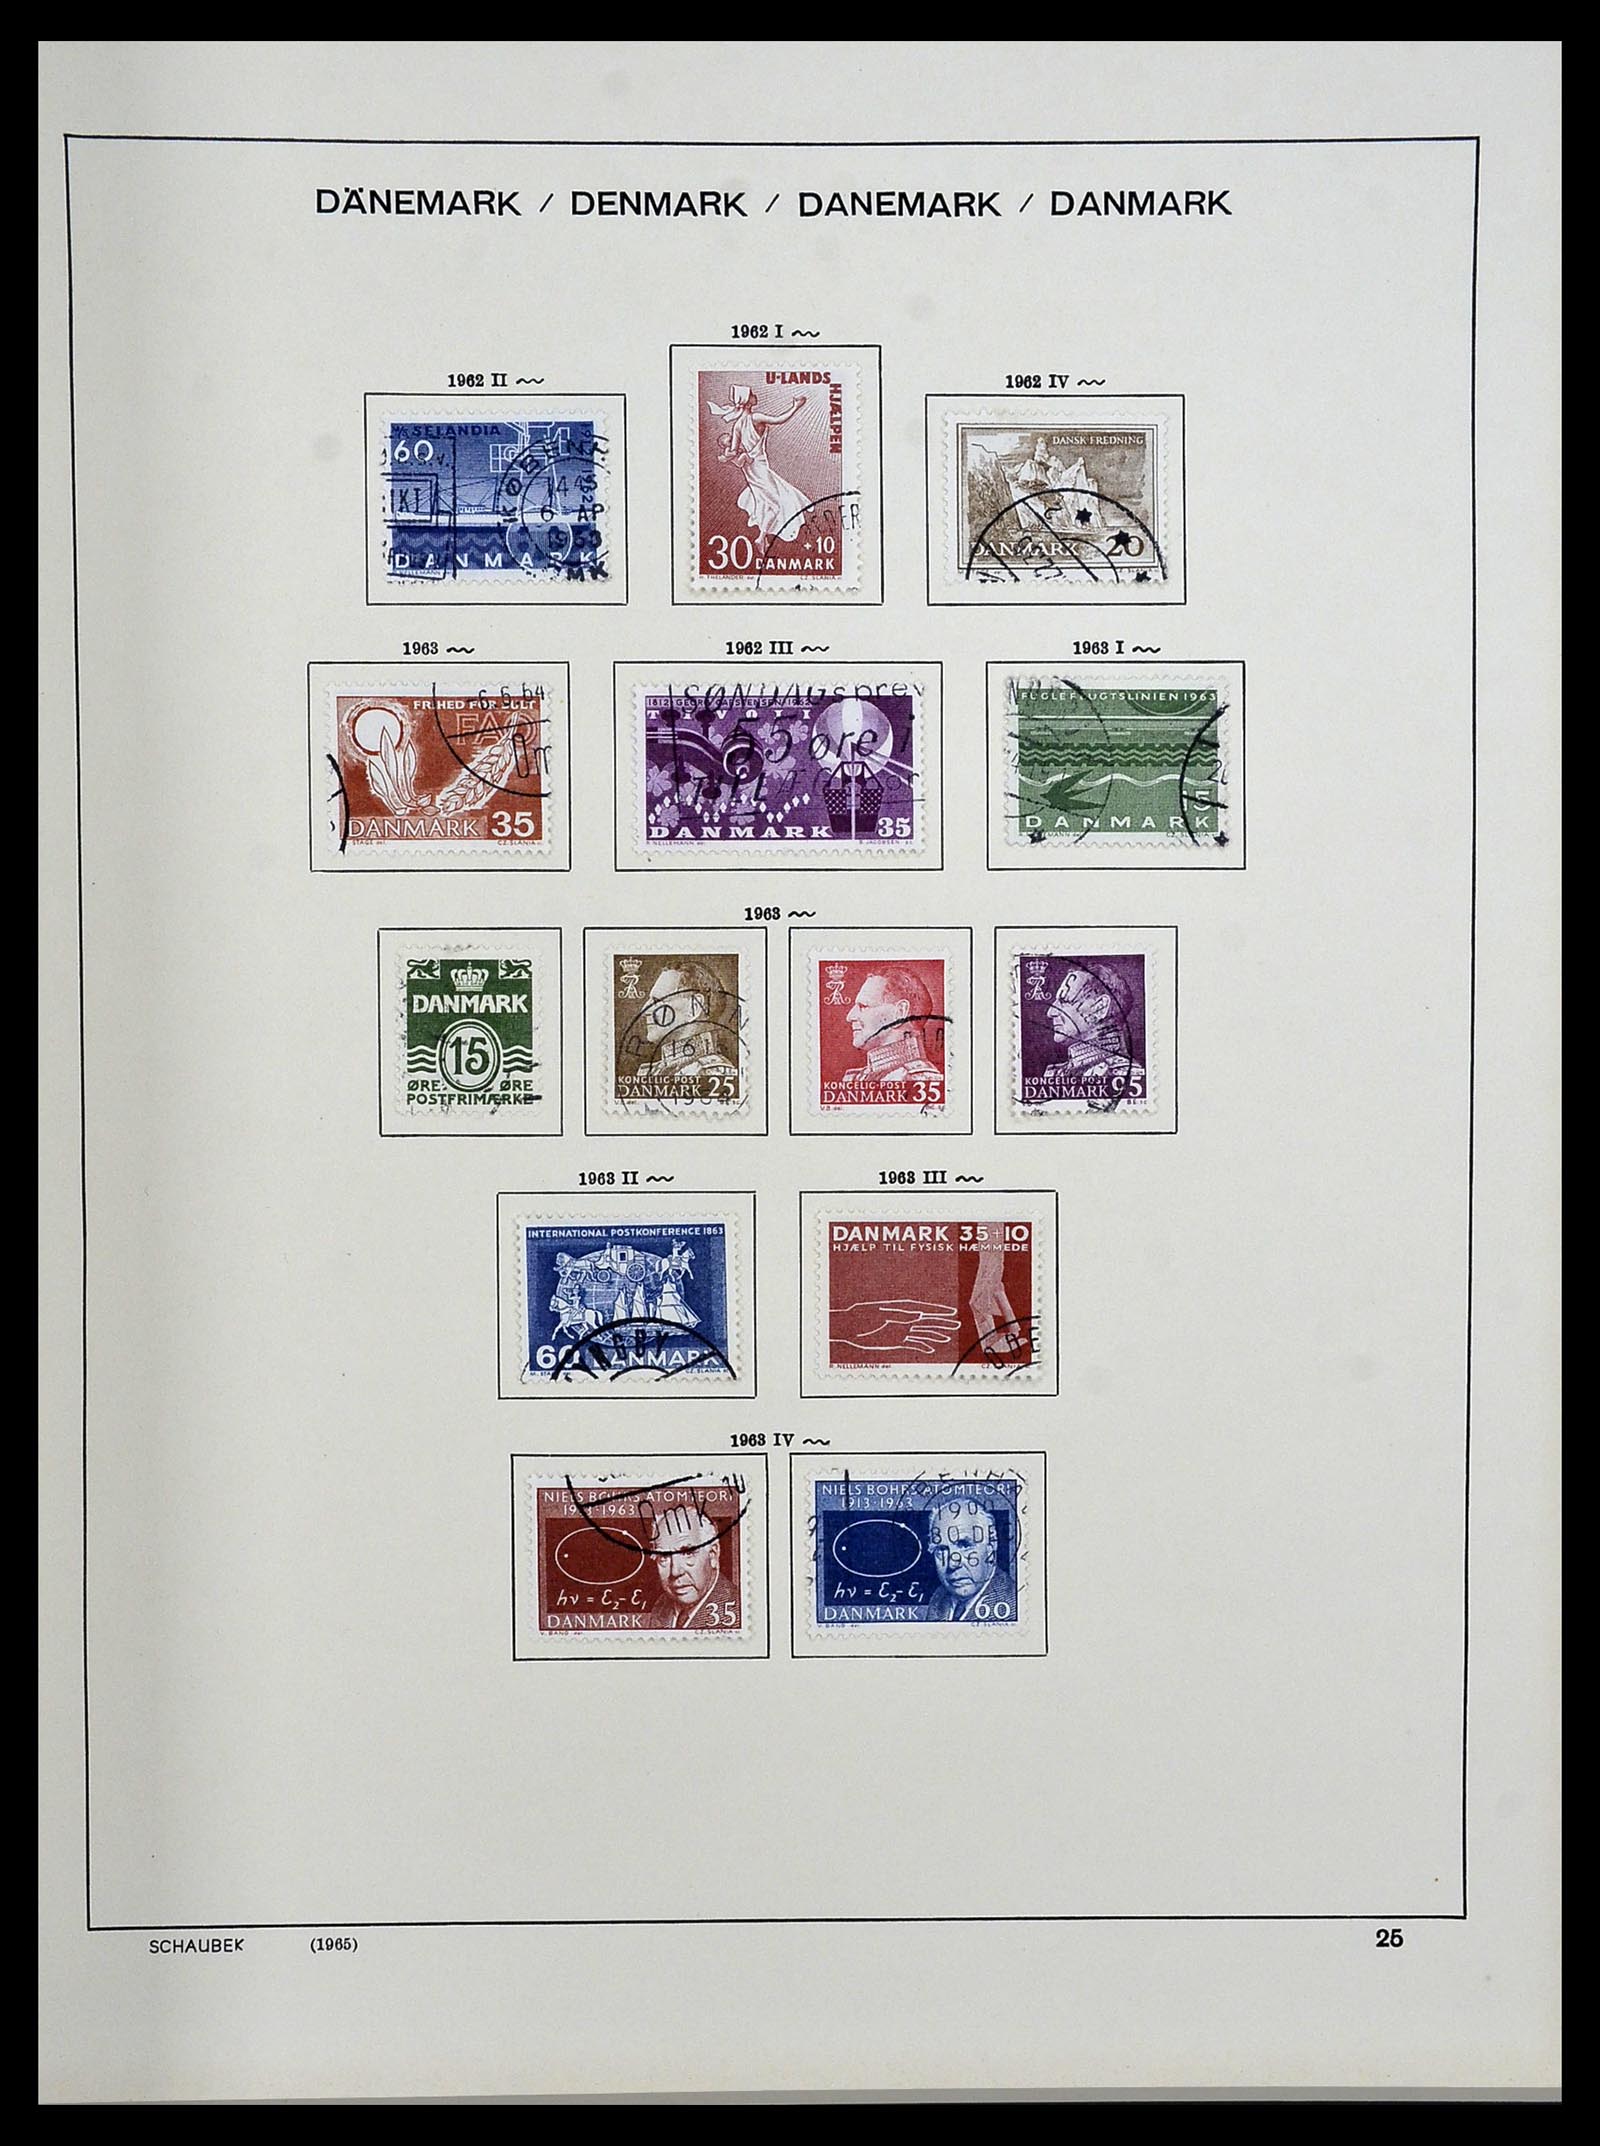 34312 033 - Stamp collection 34312 Scandinavia 1855-1965.